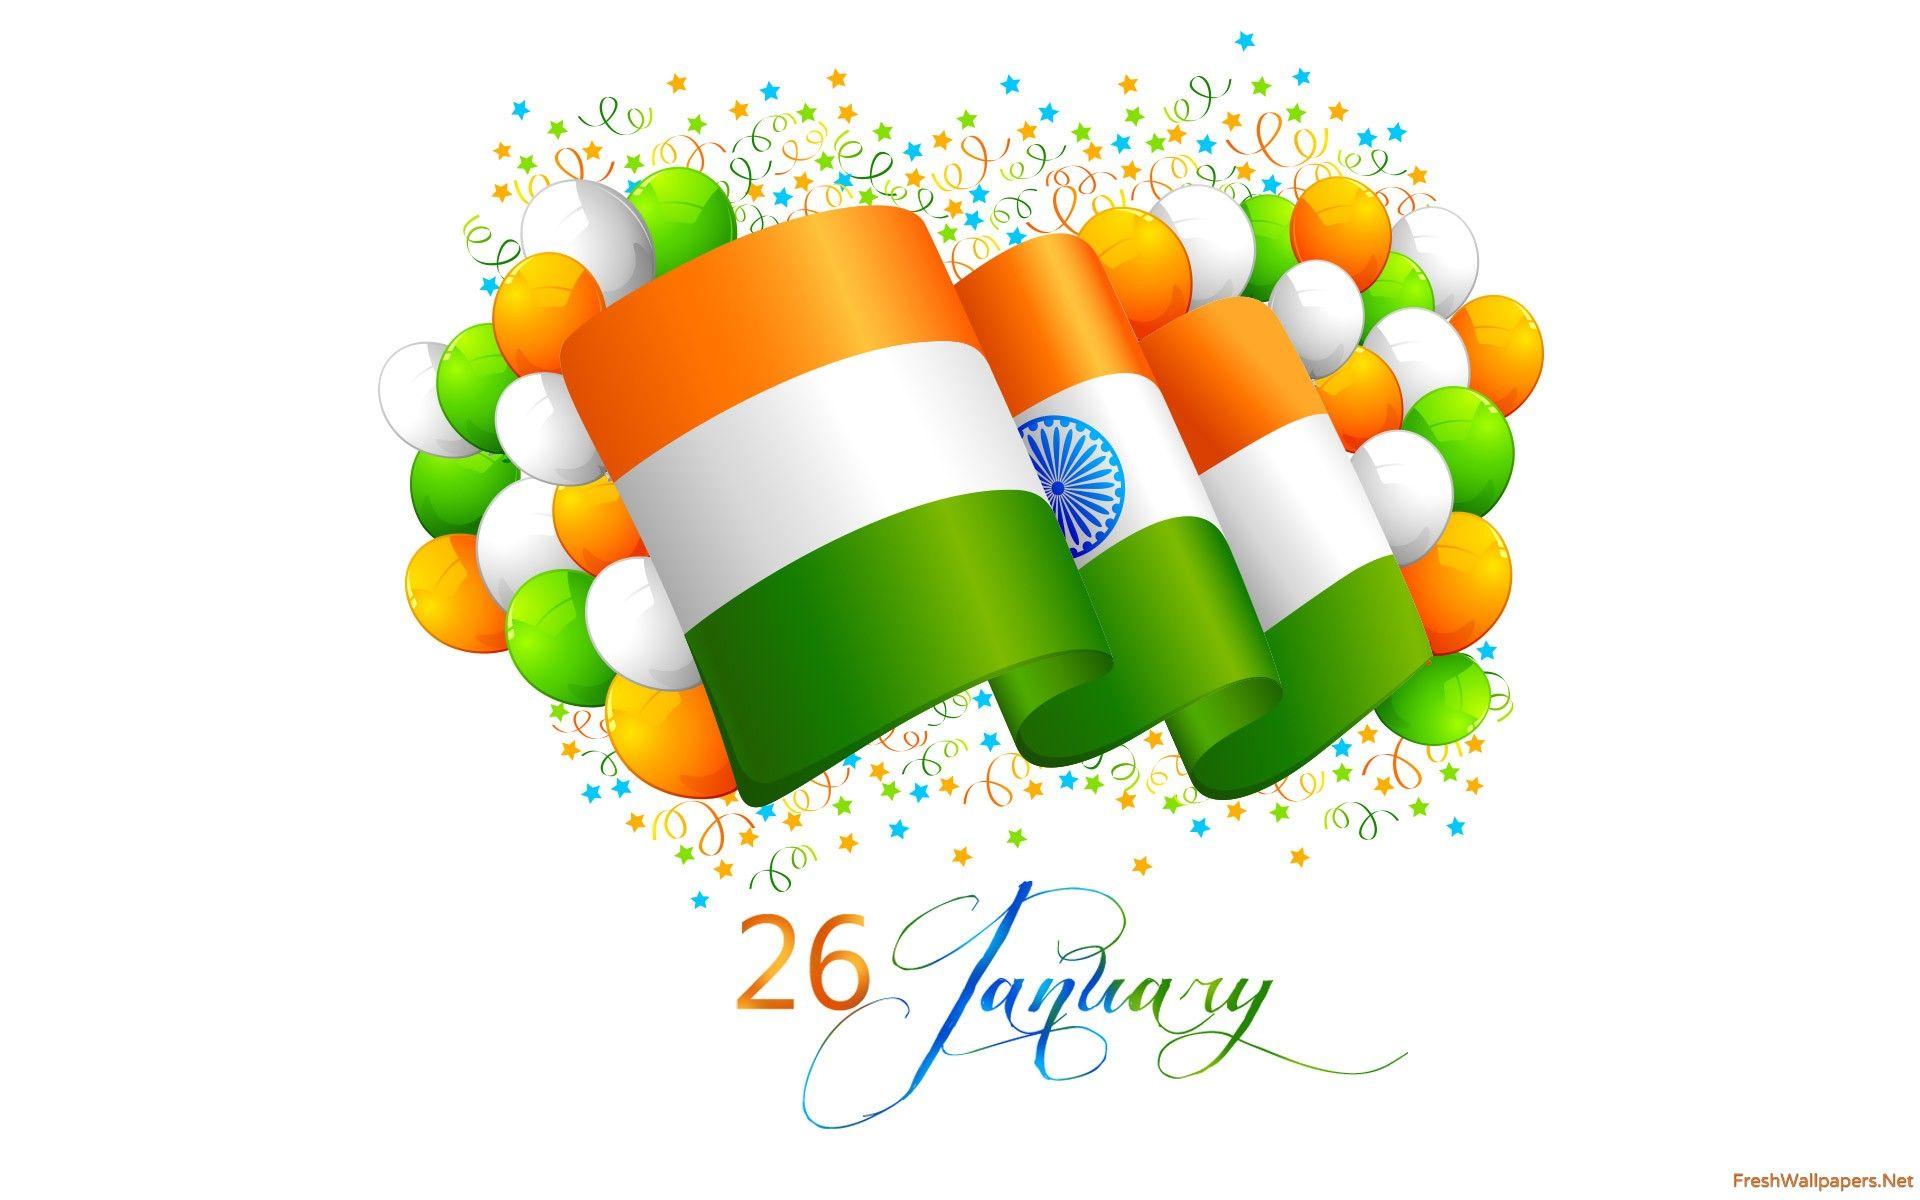 3D Republic Day Indian Flag wallpaper